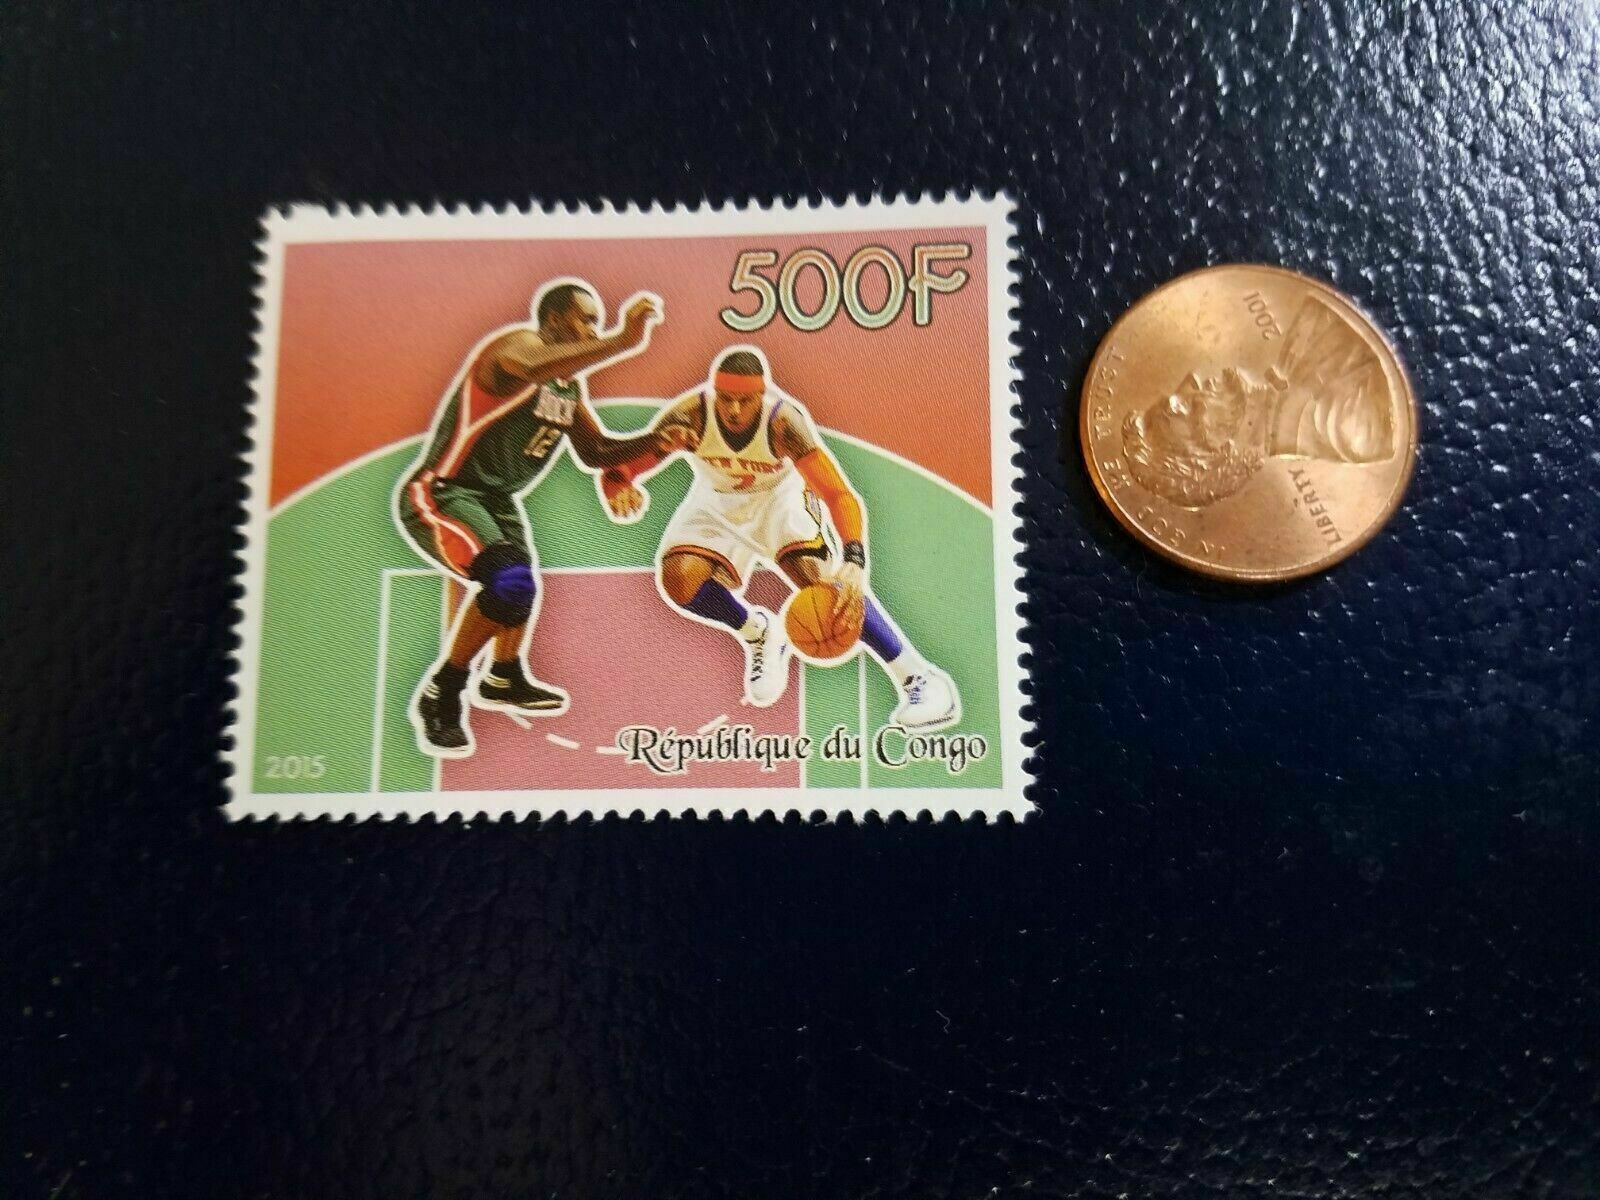 Carmelo Anthony New York Knicks Republique Du Congo 2015 Perforated Stamp